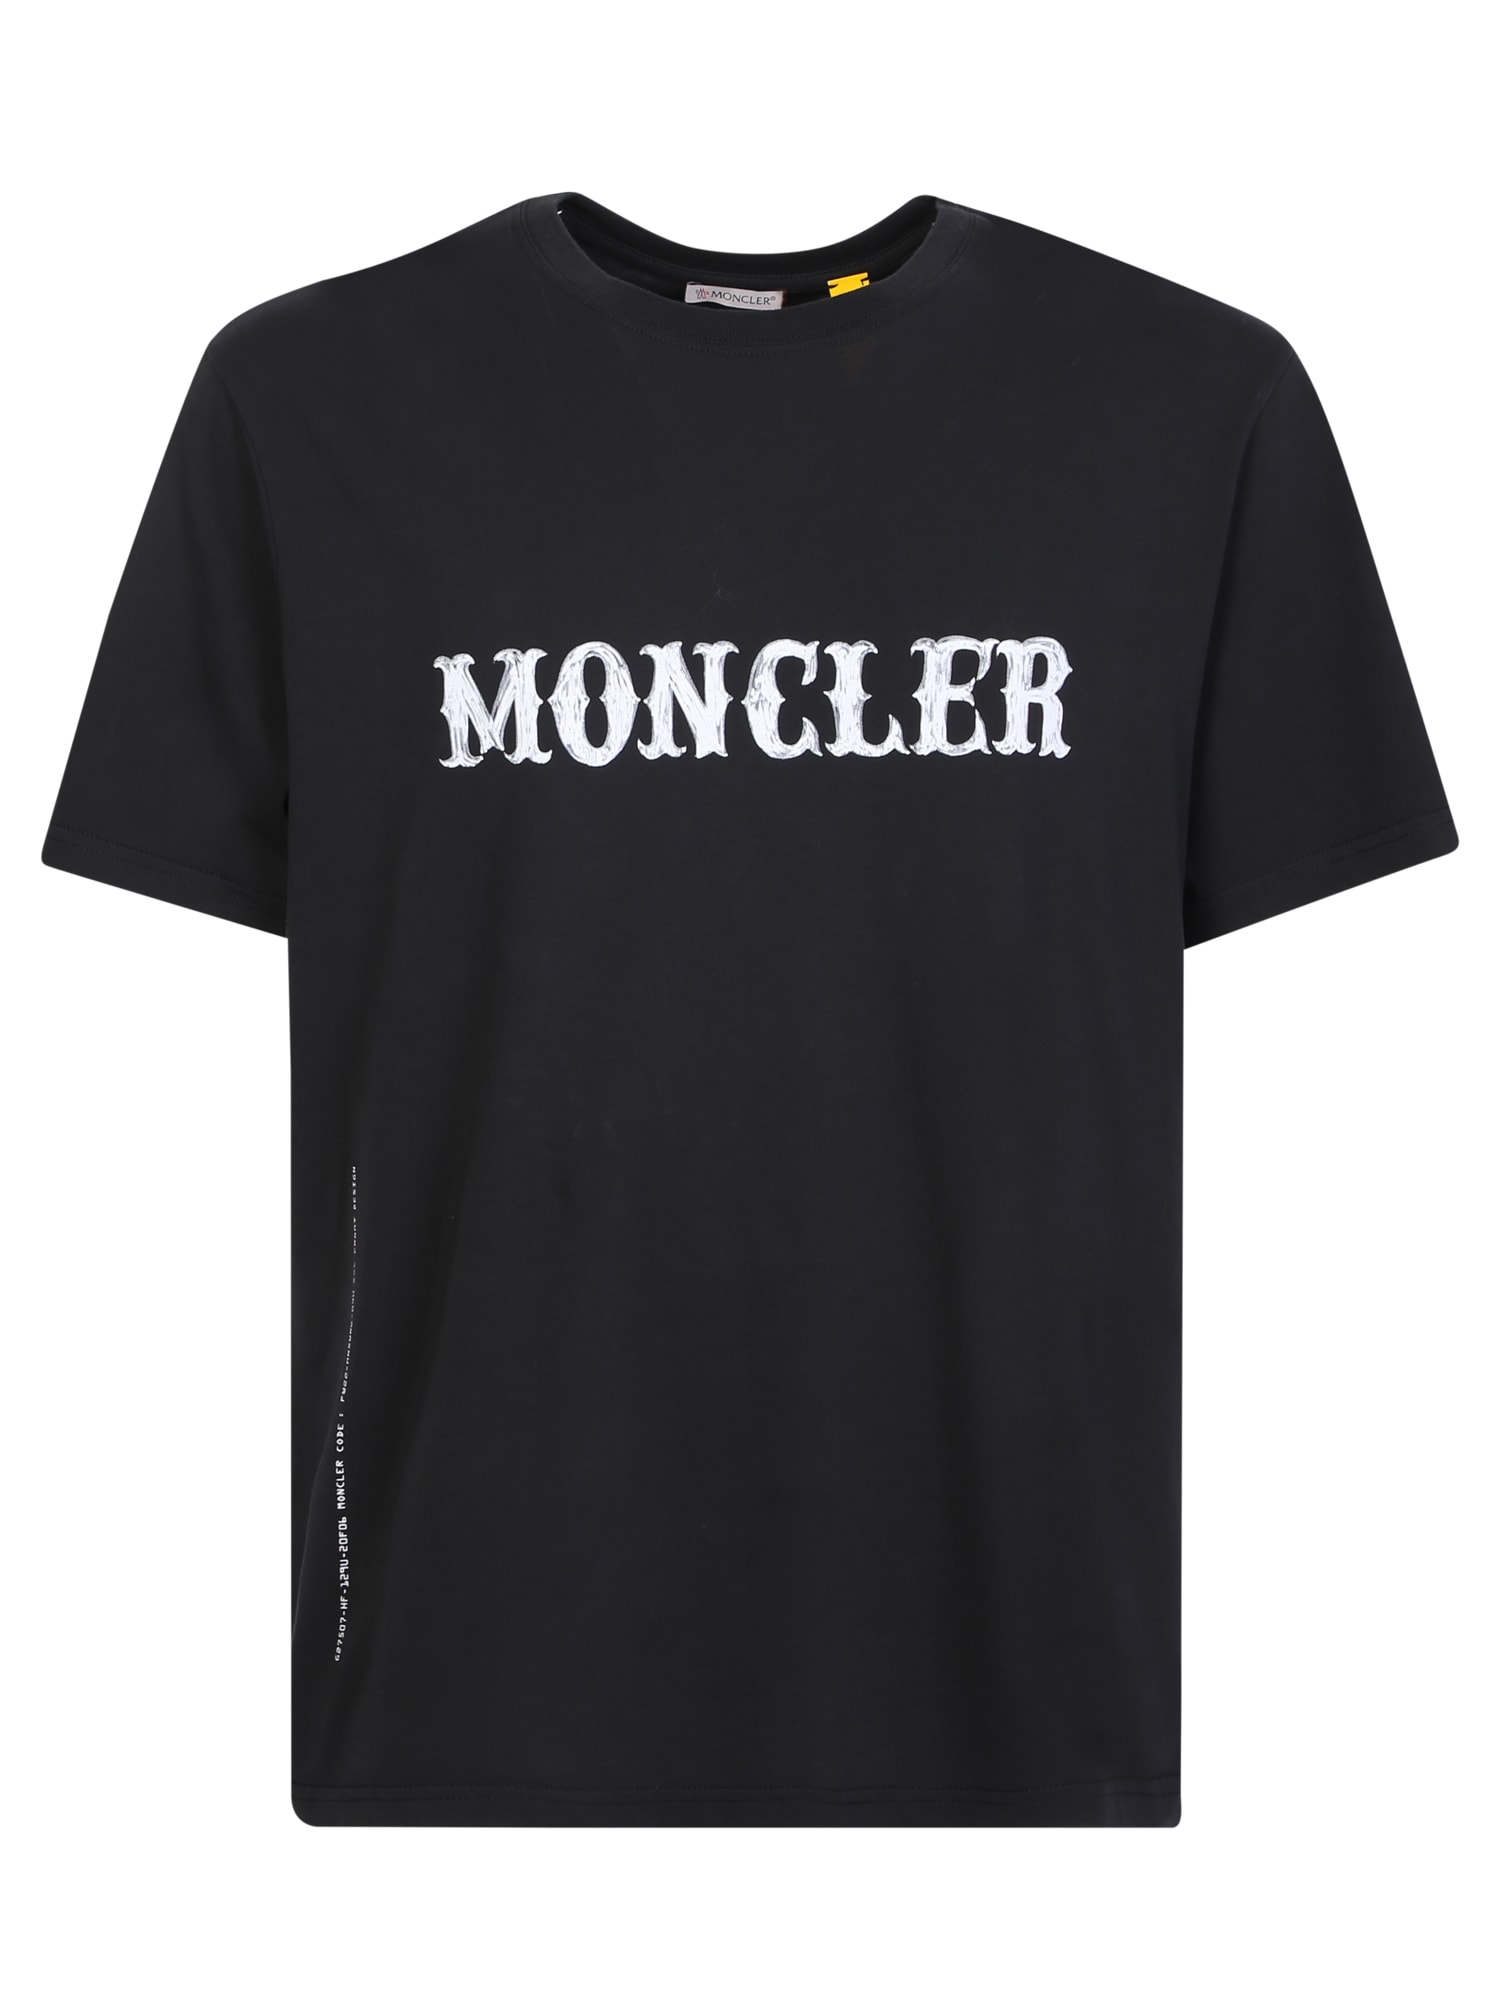 Moncler Genius Black Printed T-shirt